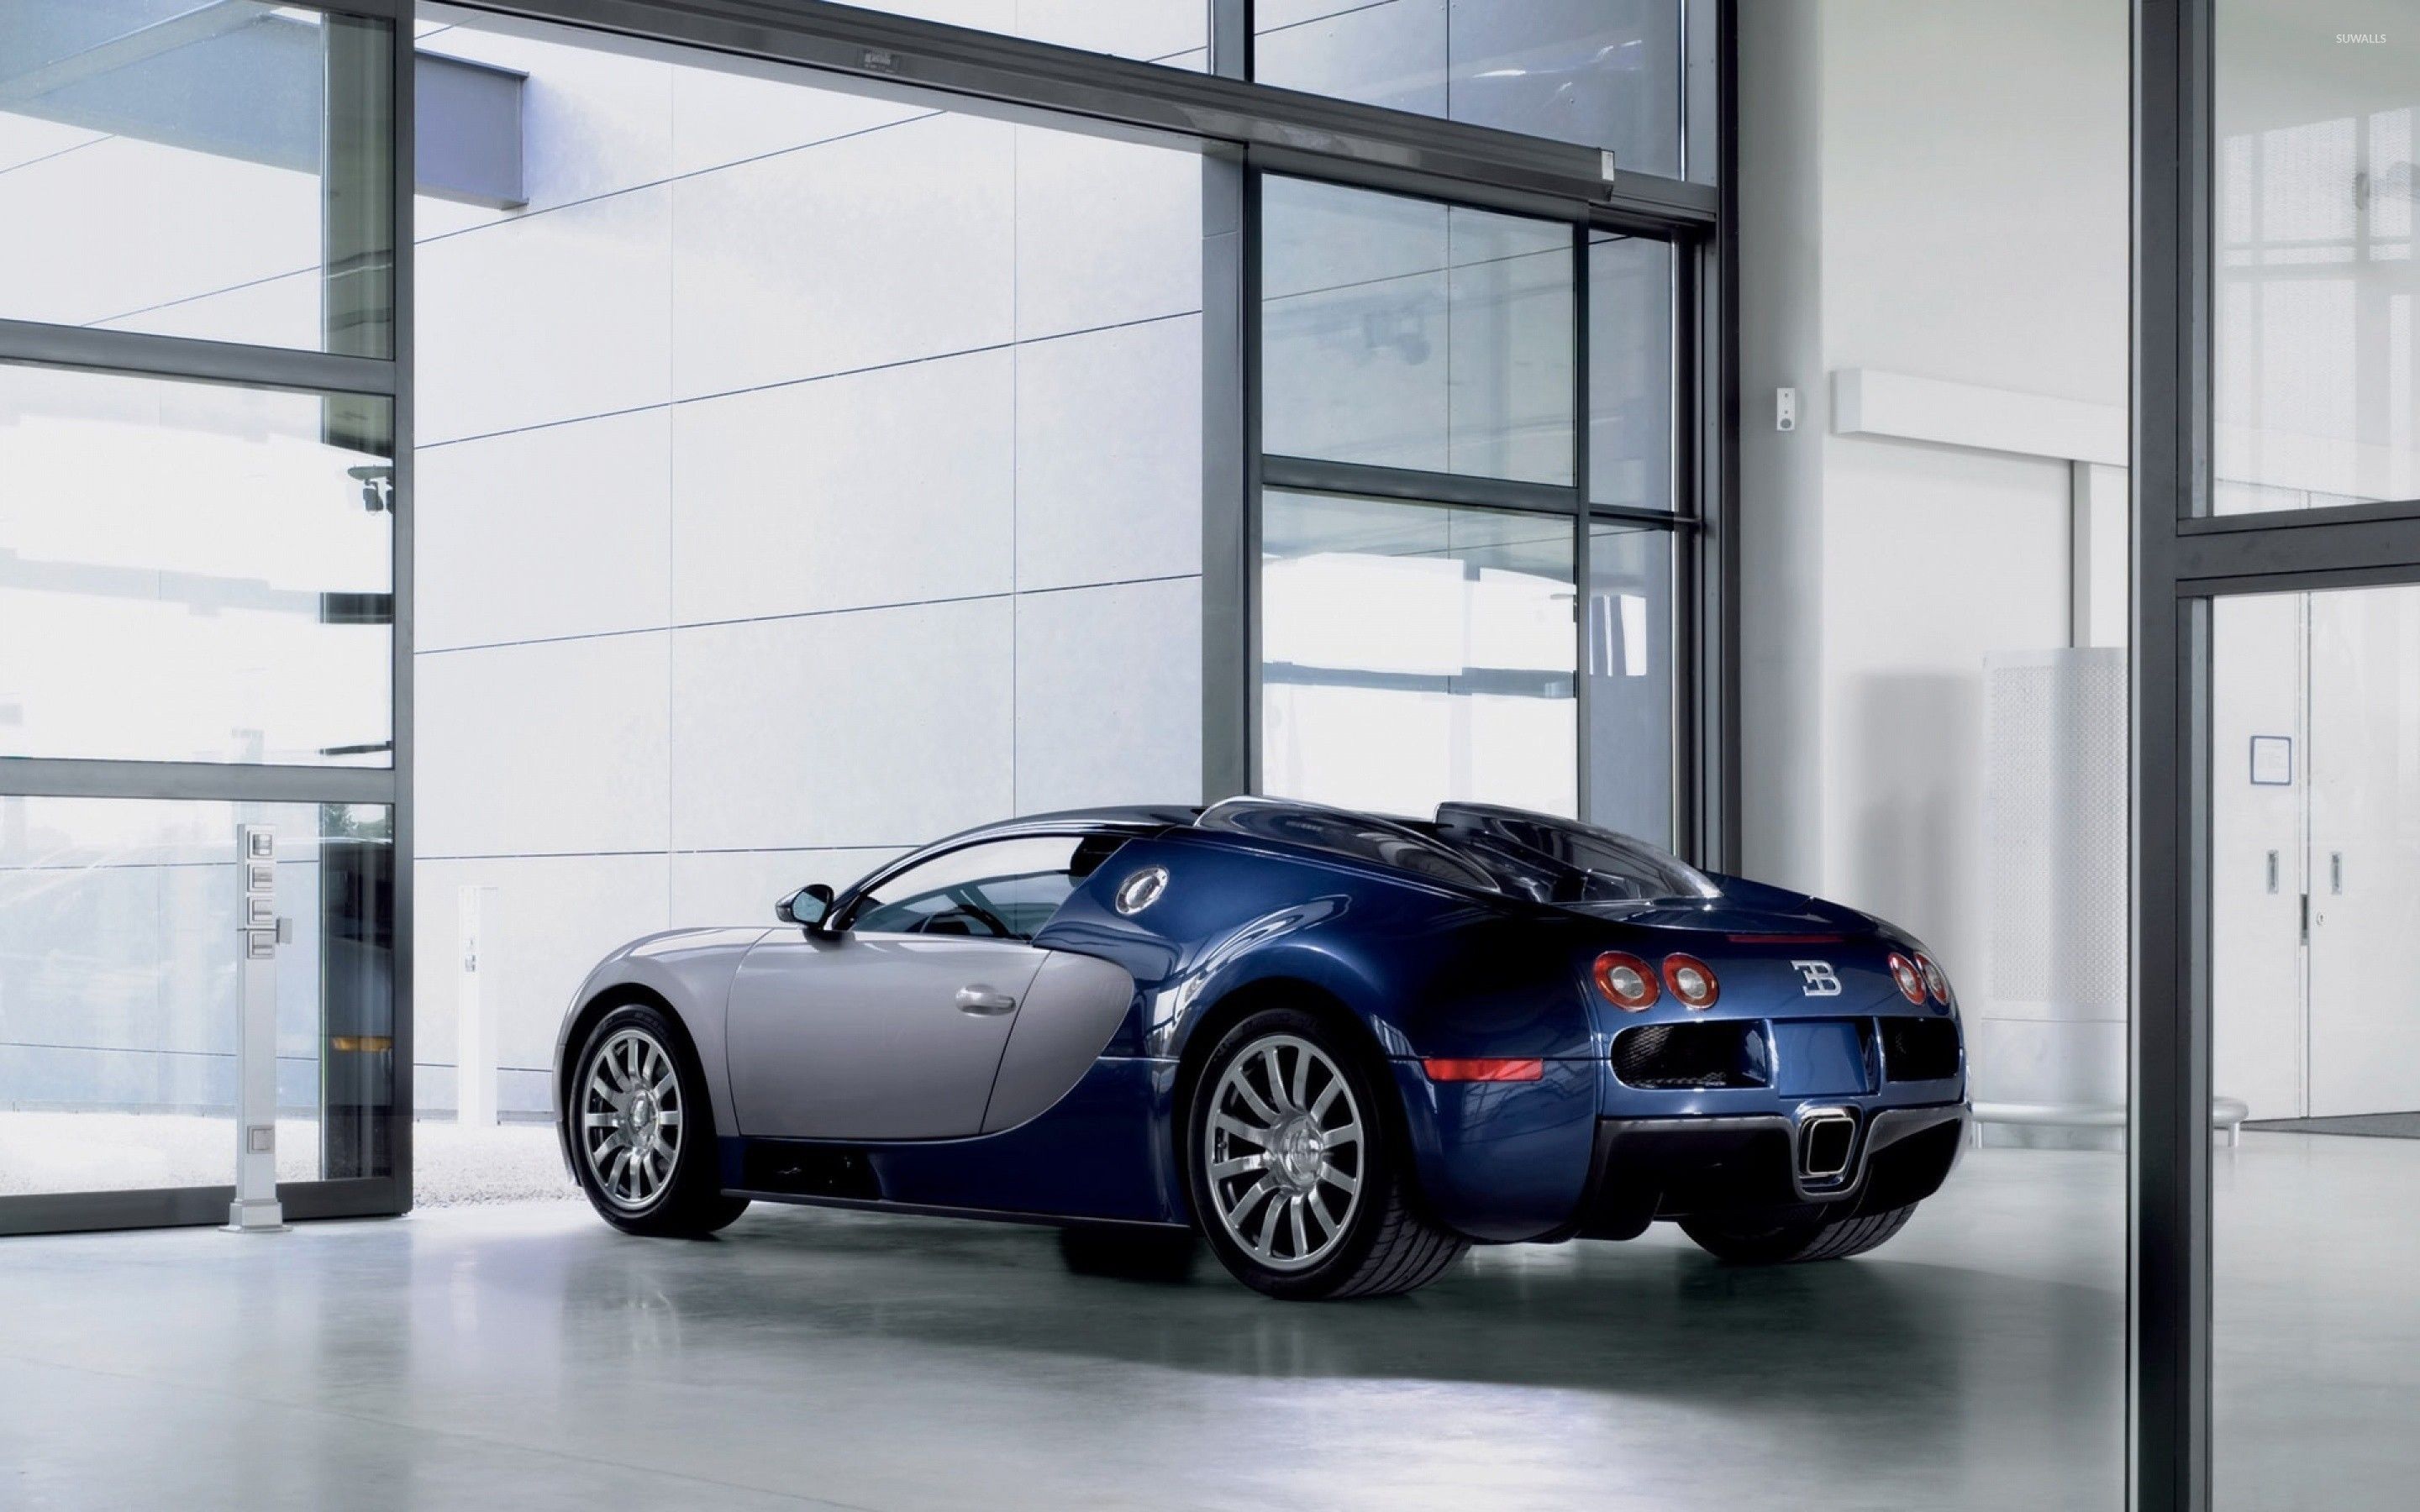 Bugatti Veyron in a showroom wallpaper wallpaper